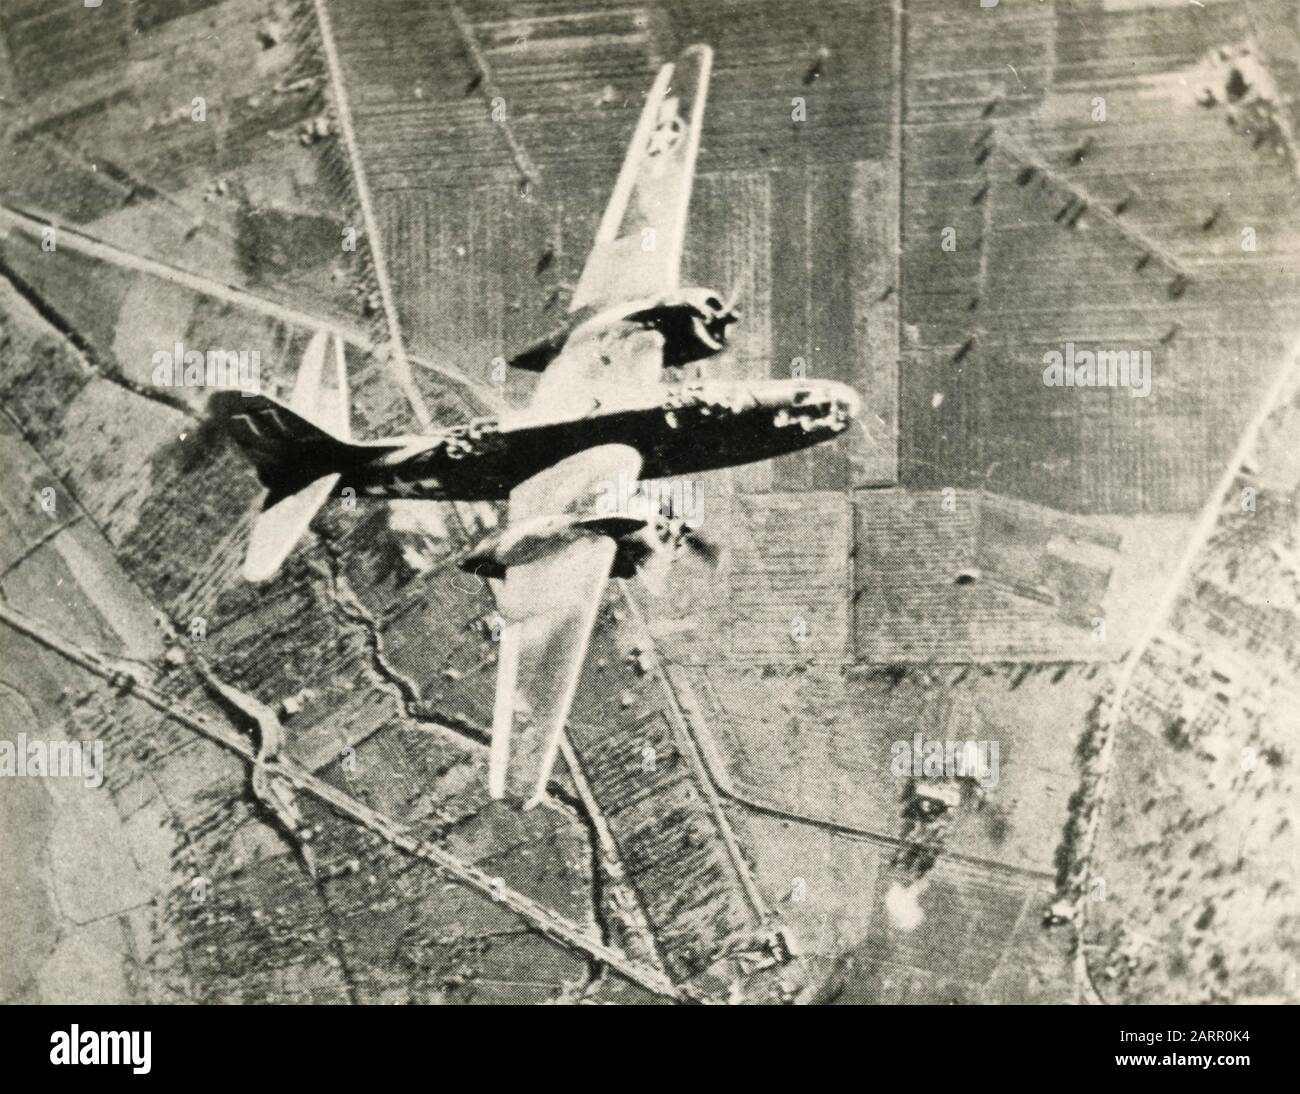 US bomber aircraft Douglas A-20 Havoc, 1940s Stock Photo